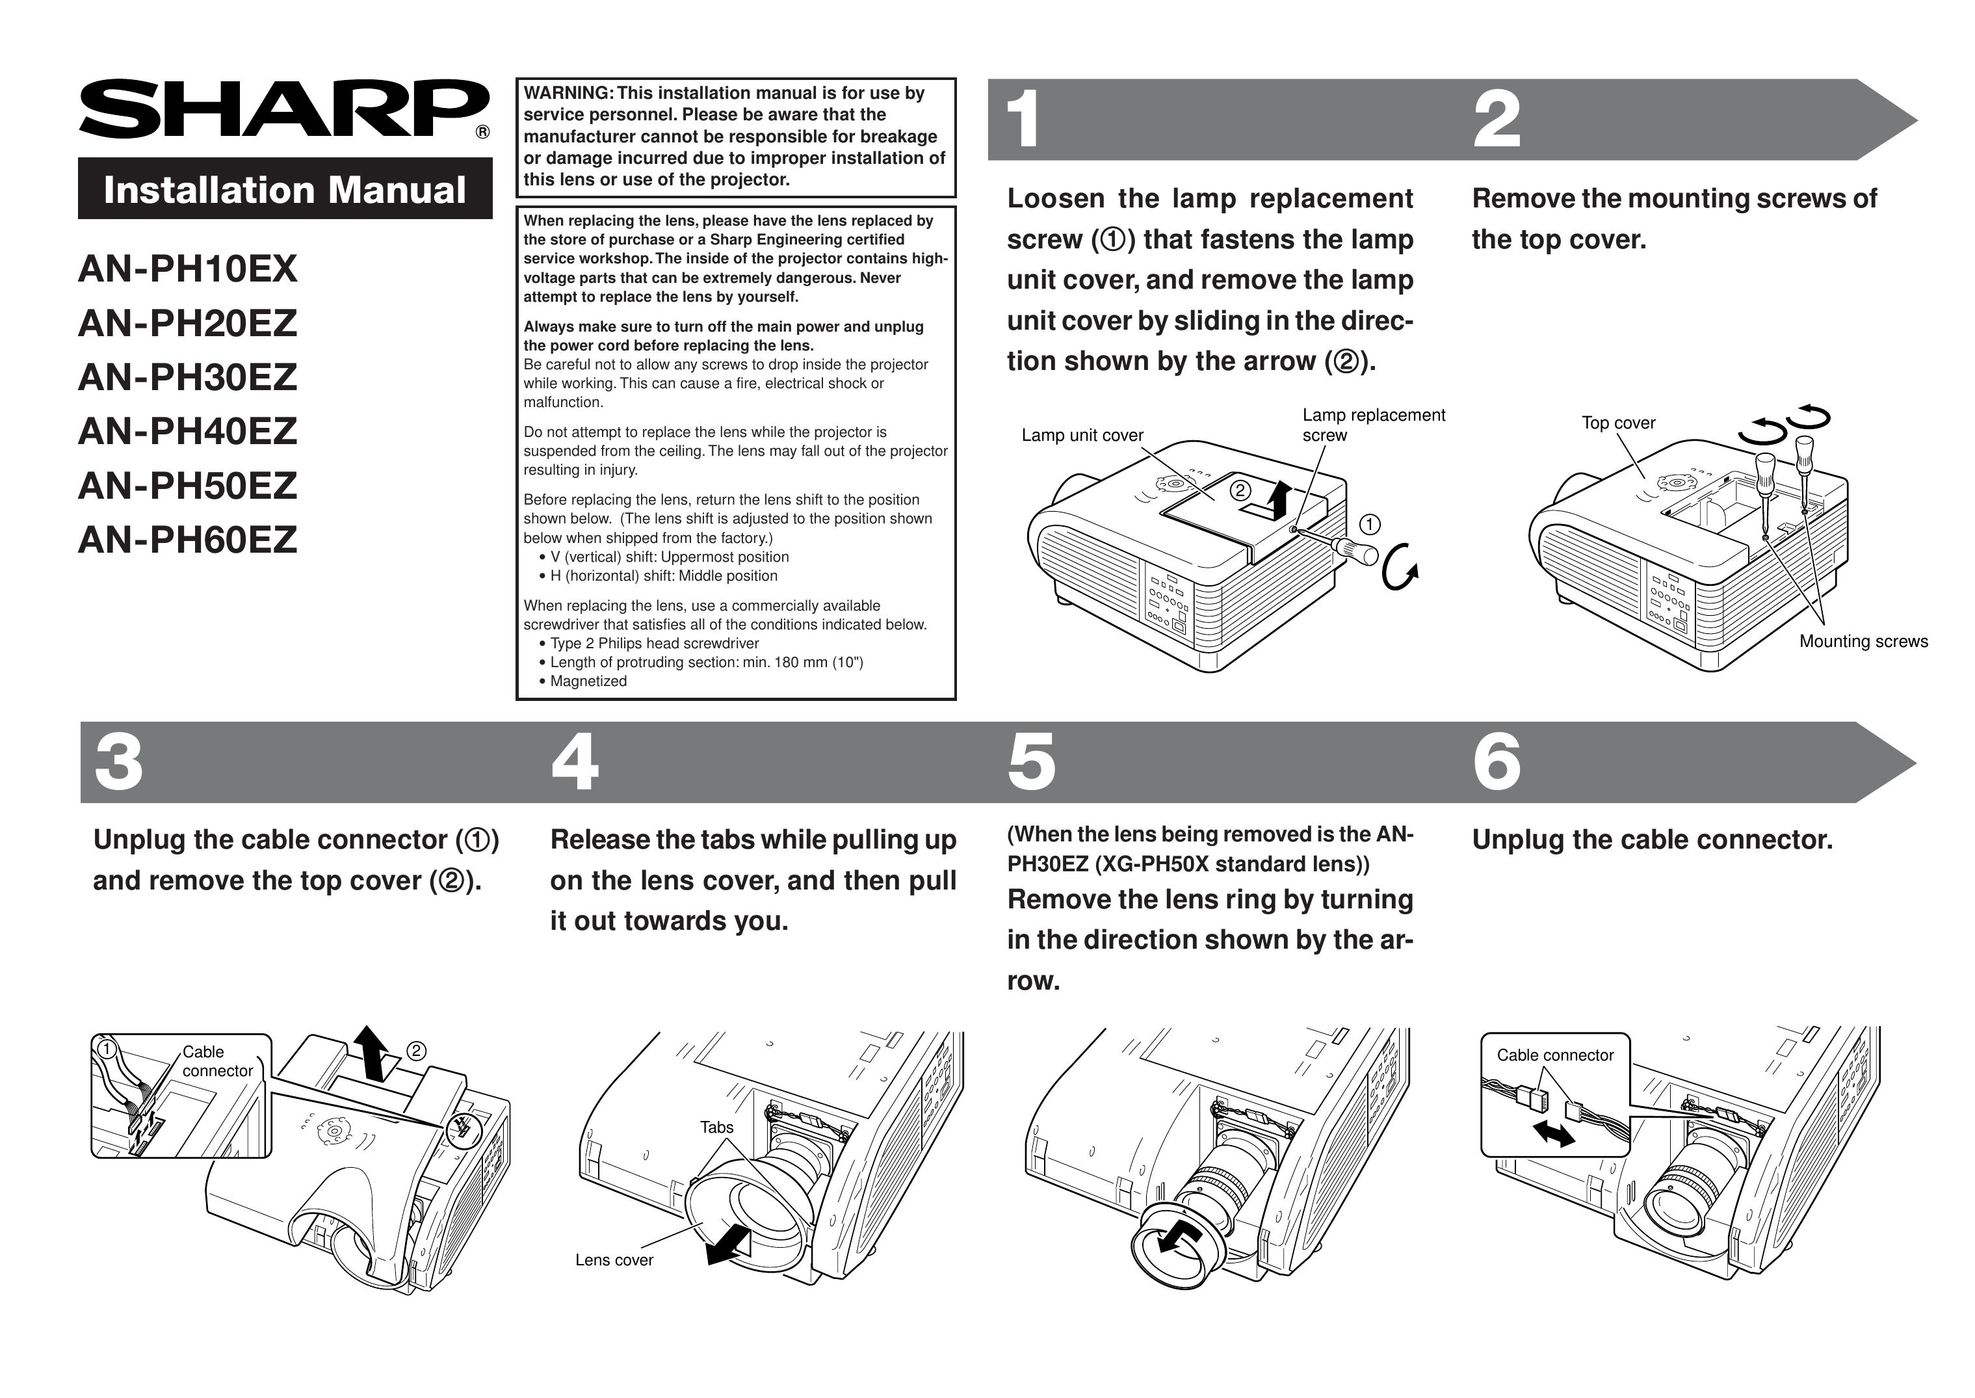 Sharp AN-PH20EZ Indoor Furnishings User Manual